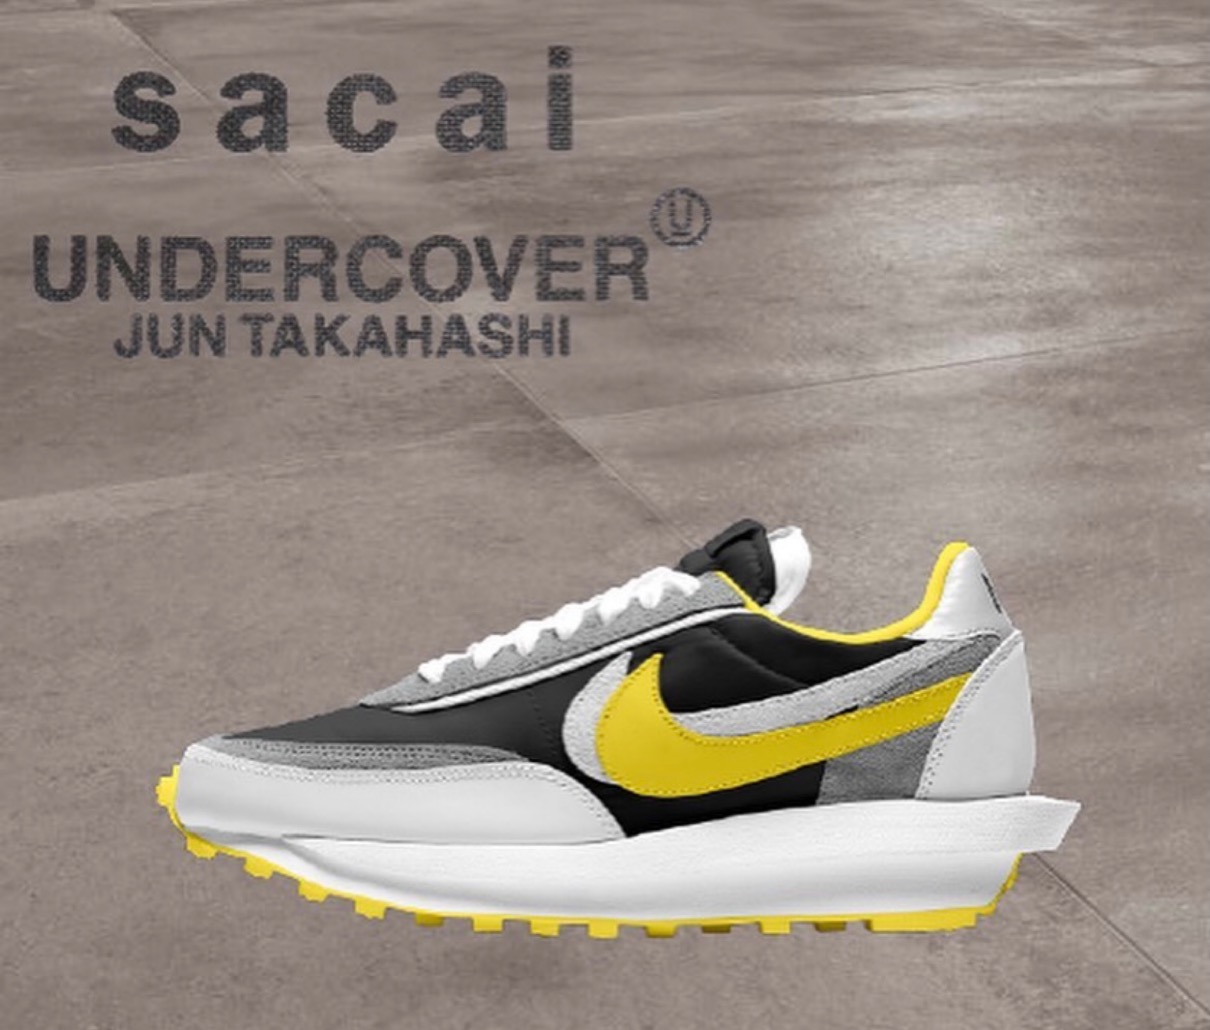 undercover sacai nike